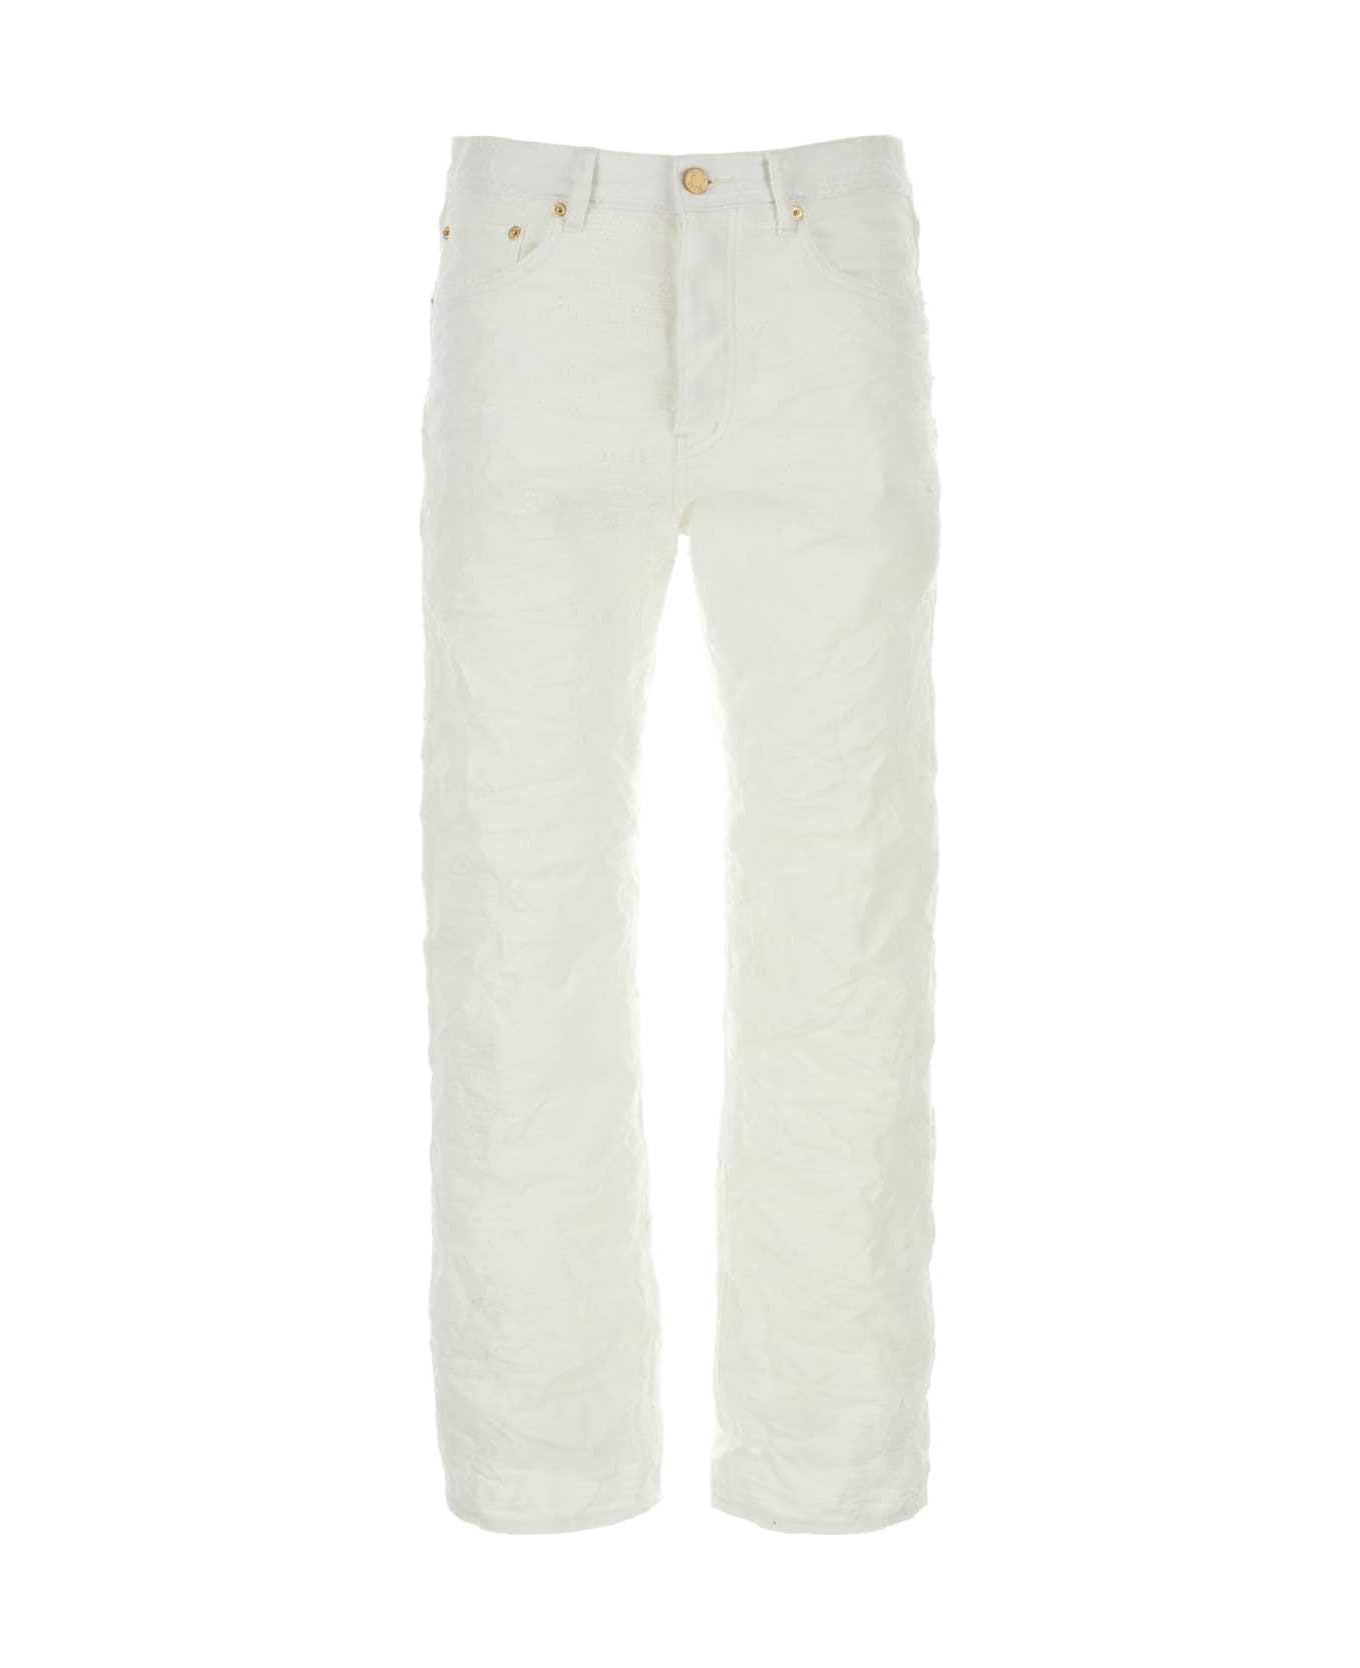 Purple Brand White Denim Jeans - OFFWHITE